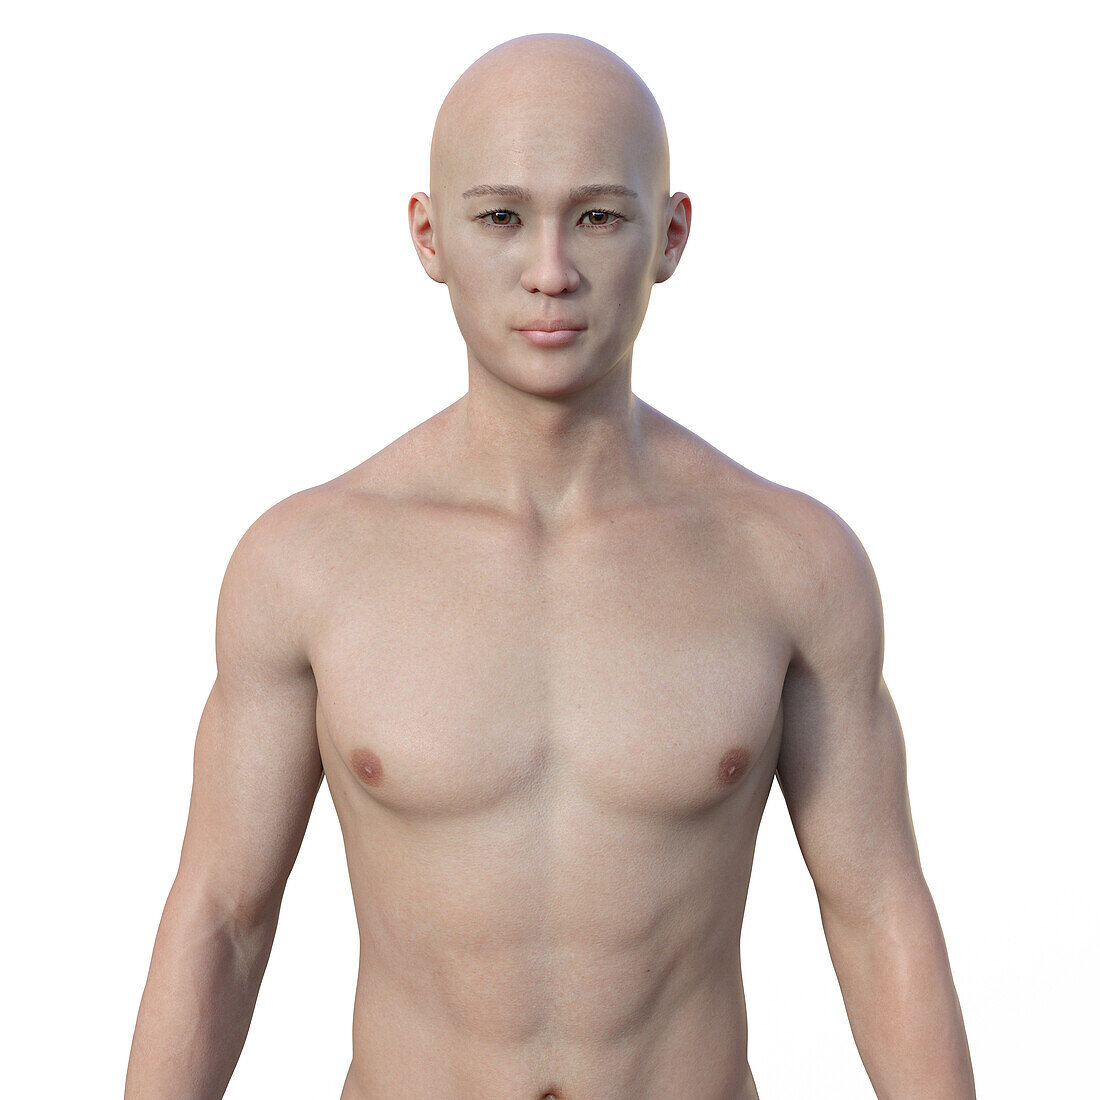 Male upper body, illustration